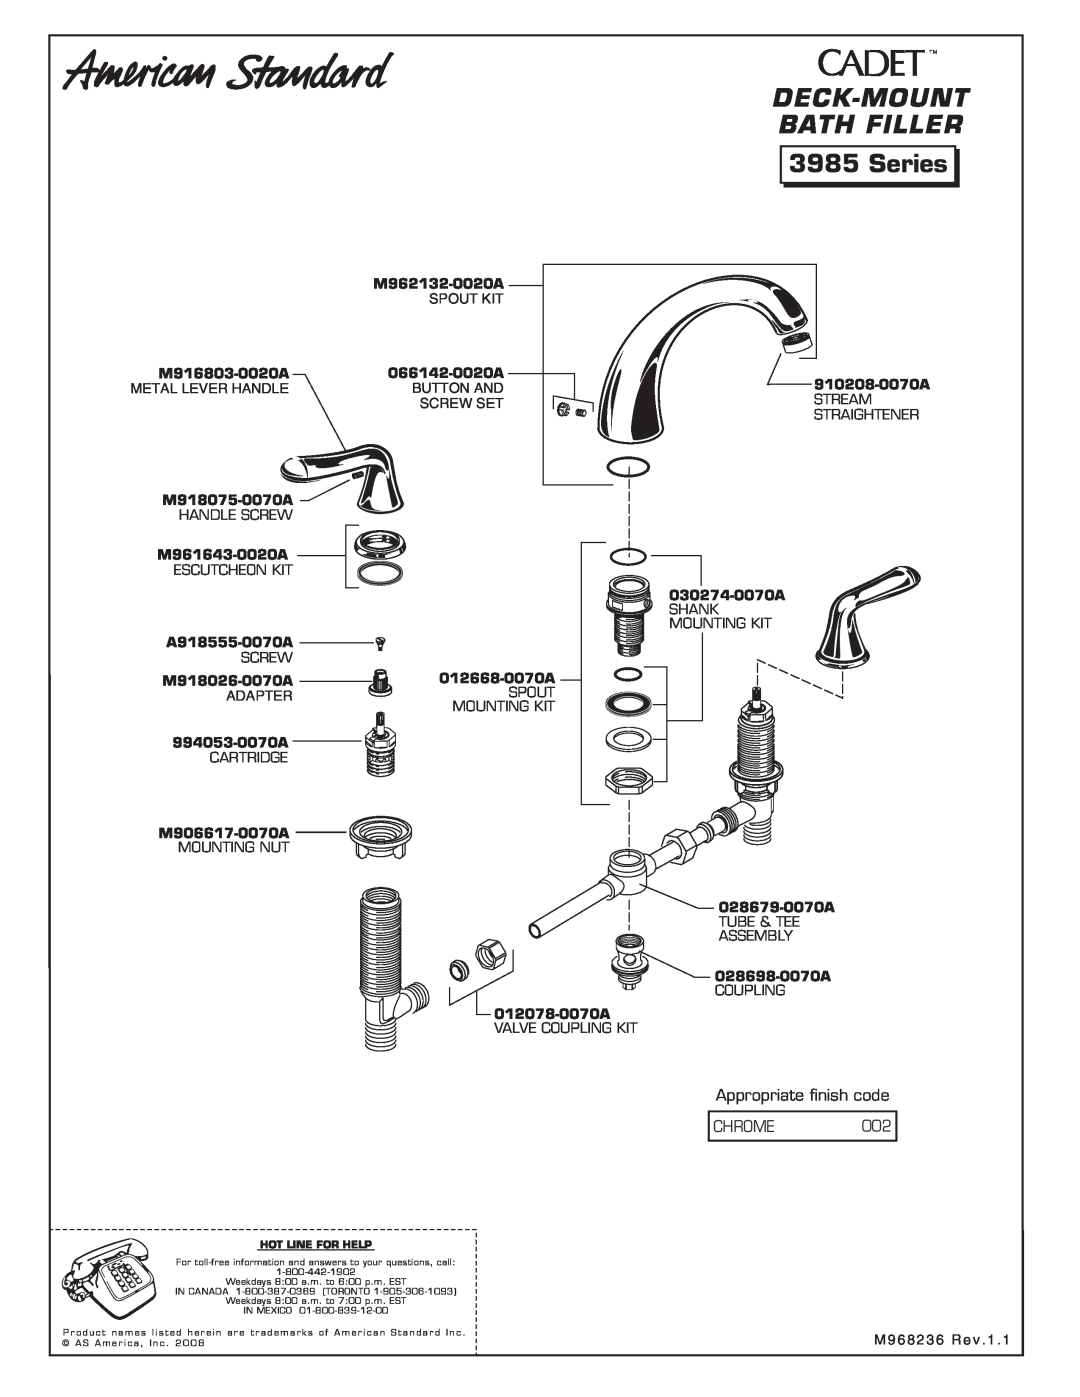 American Standard 3985 manual Deck-Mountbath Filler, Series, Appropriate ﬁnish code CHROME 